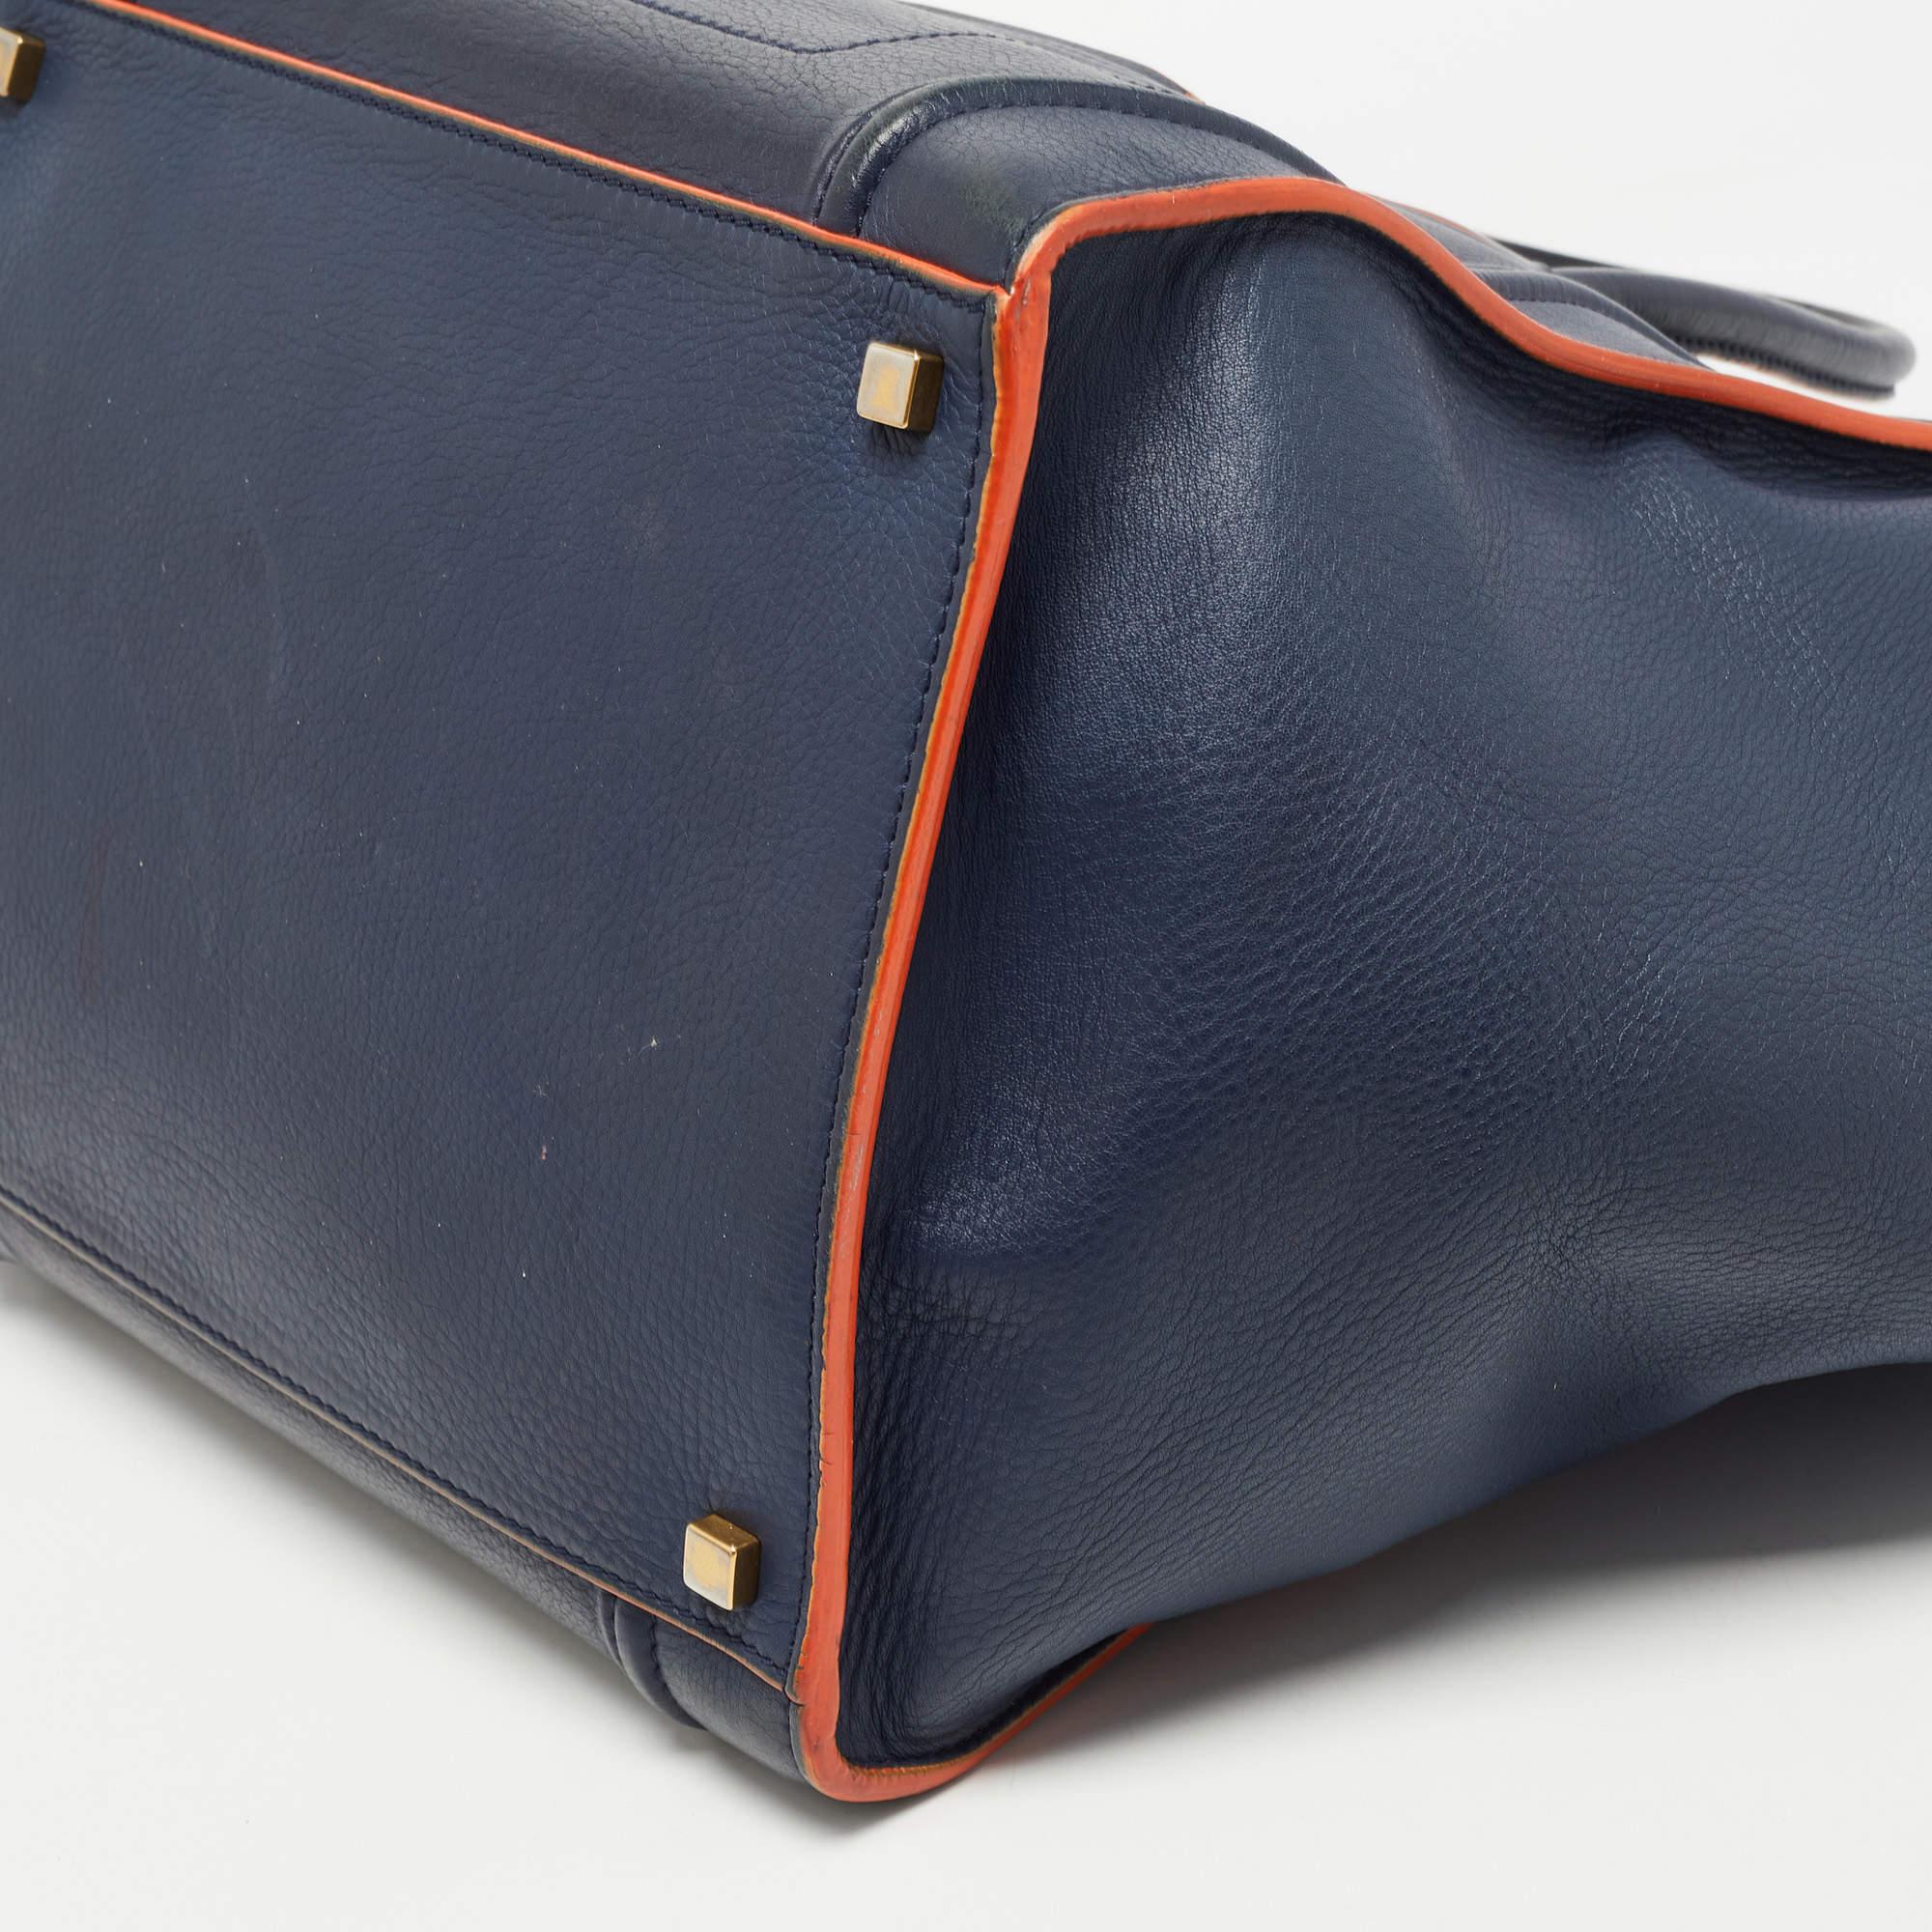 Celine Navy Blue/Orange Leather Medium Phantom Luggage Tote 10